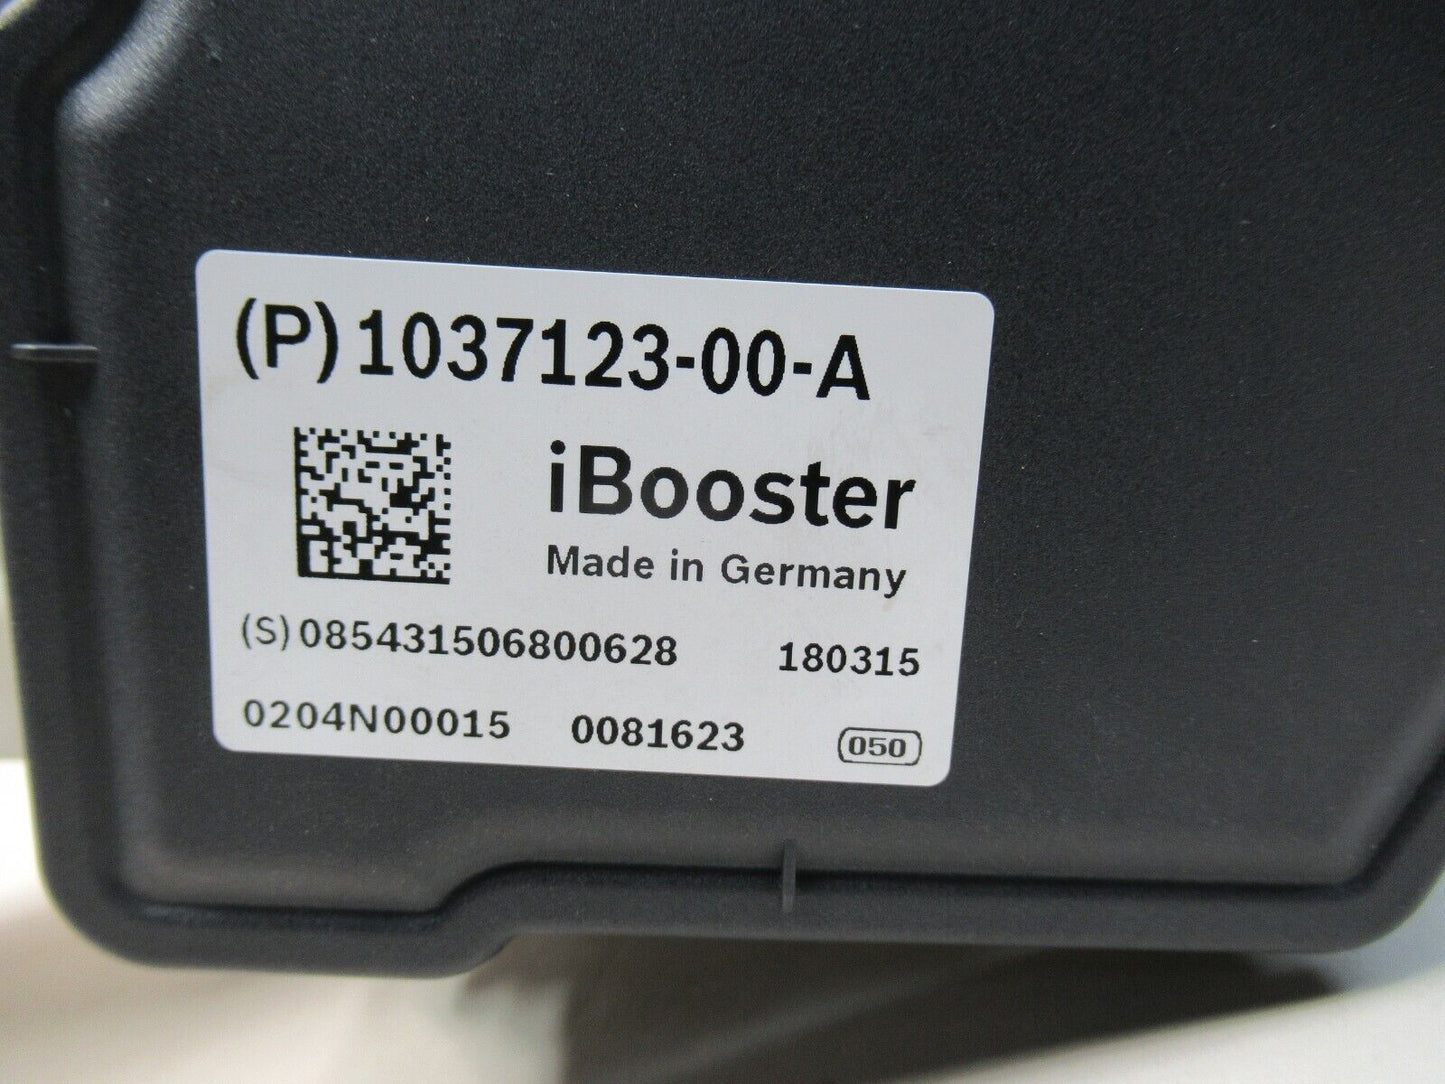 Tesla Model S Brake iBooster 1037123-00-A